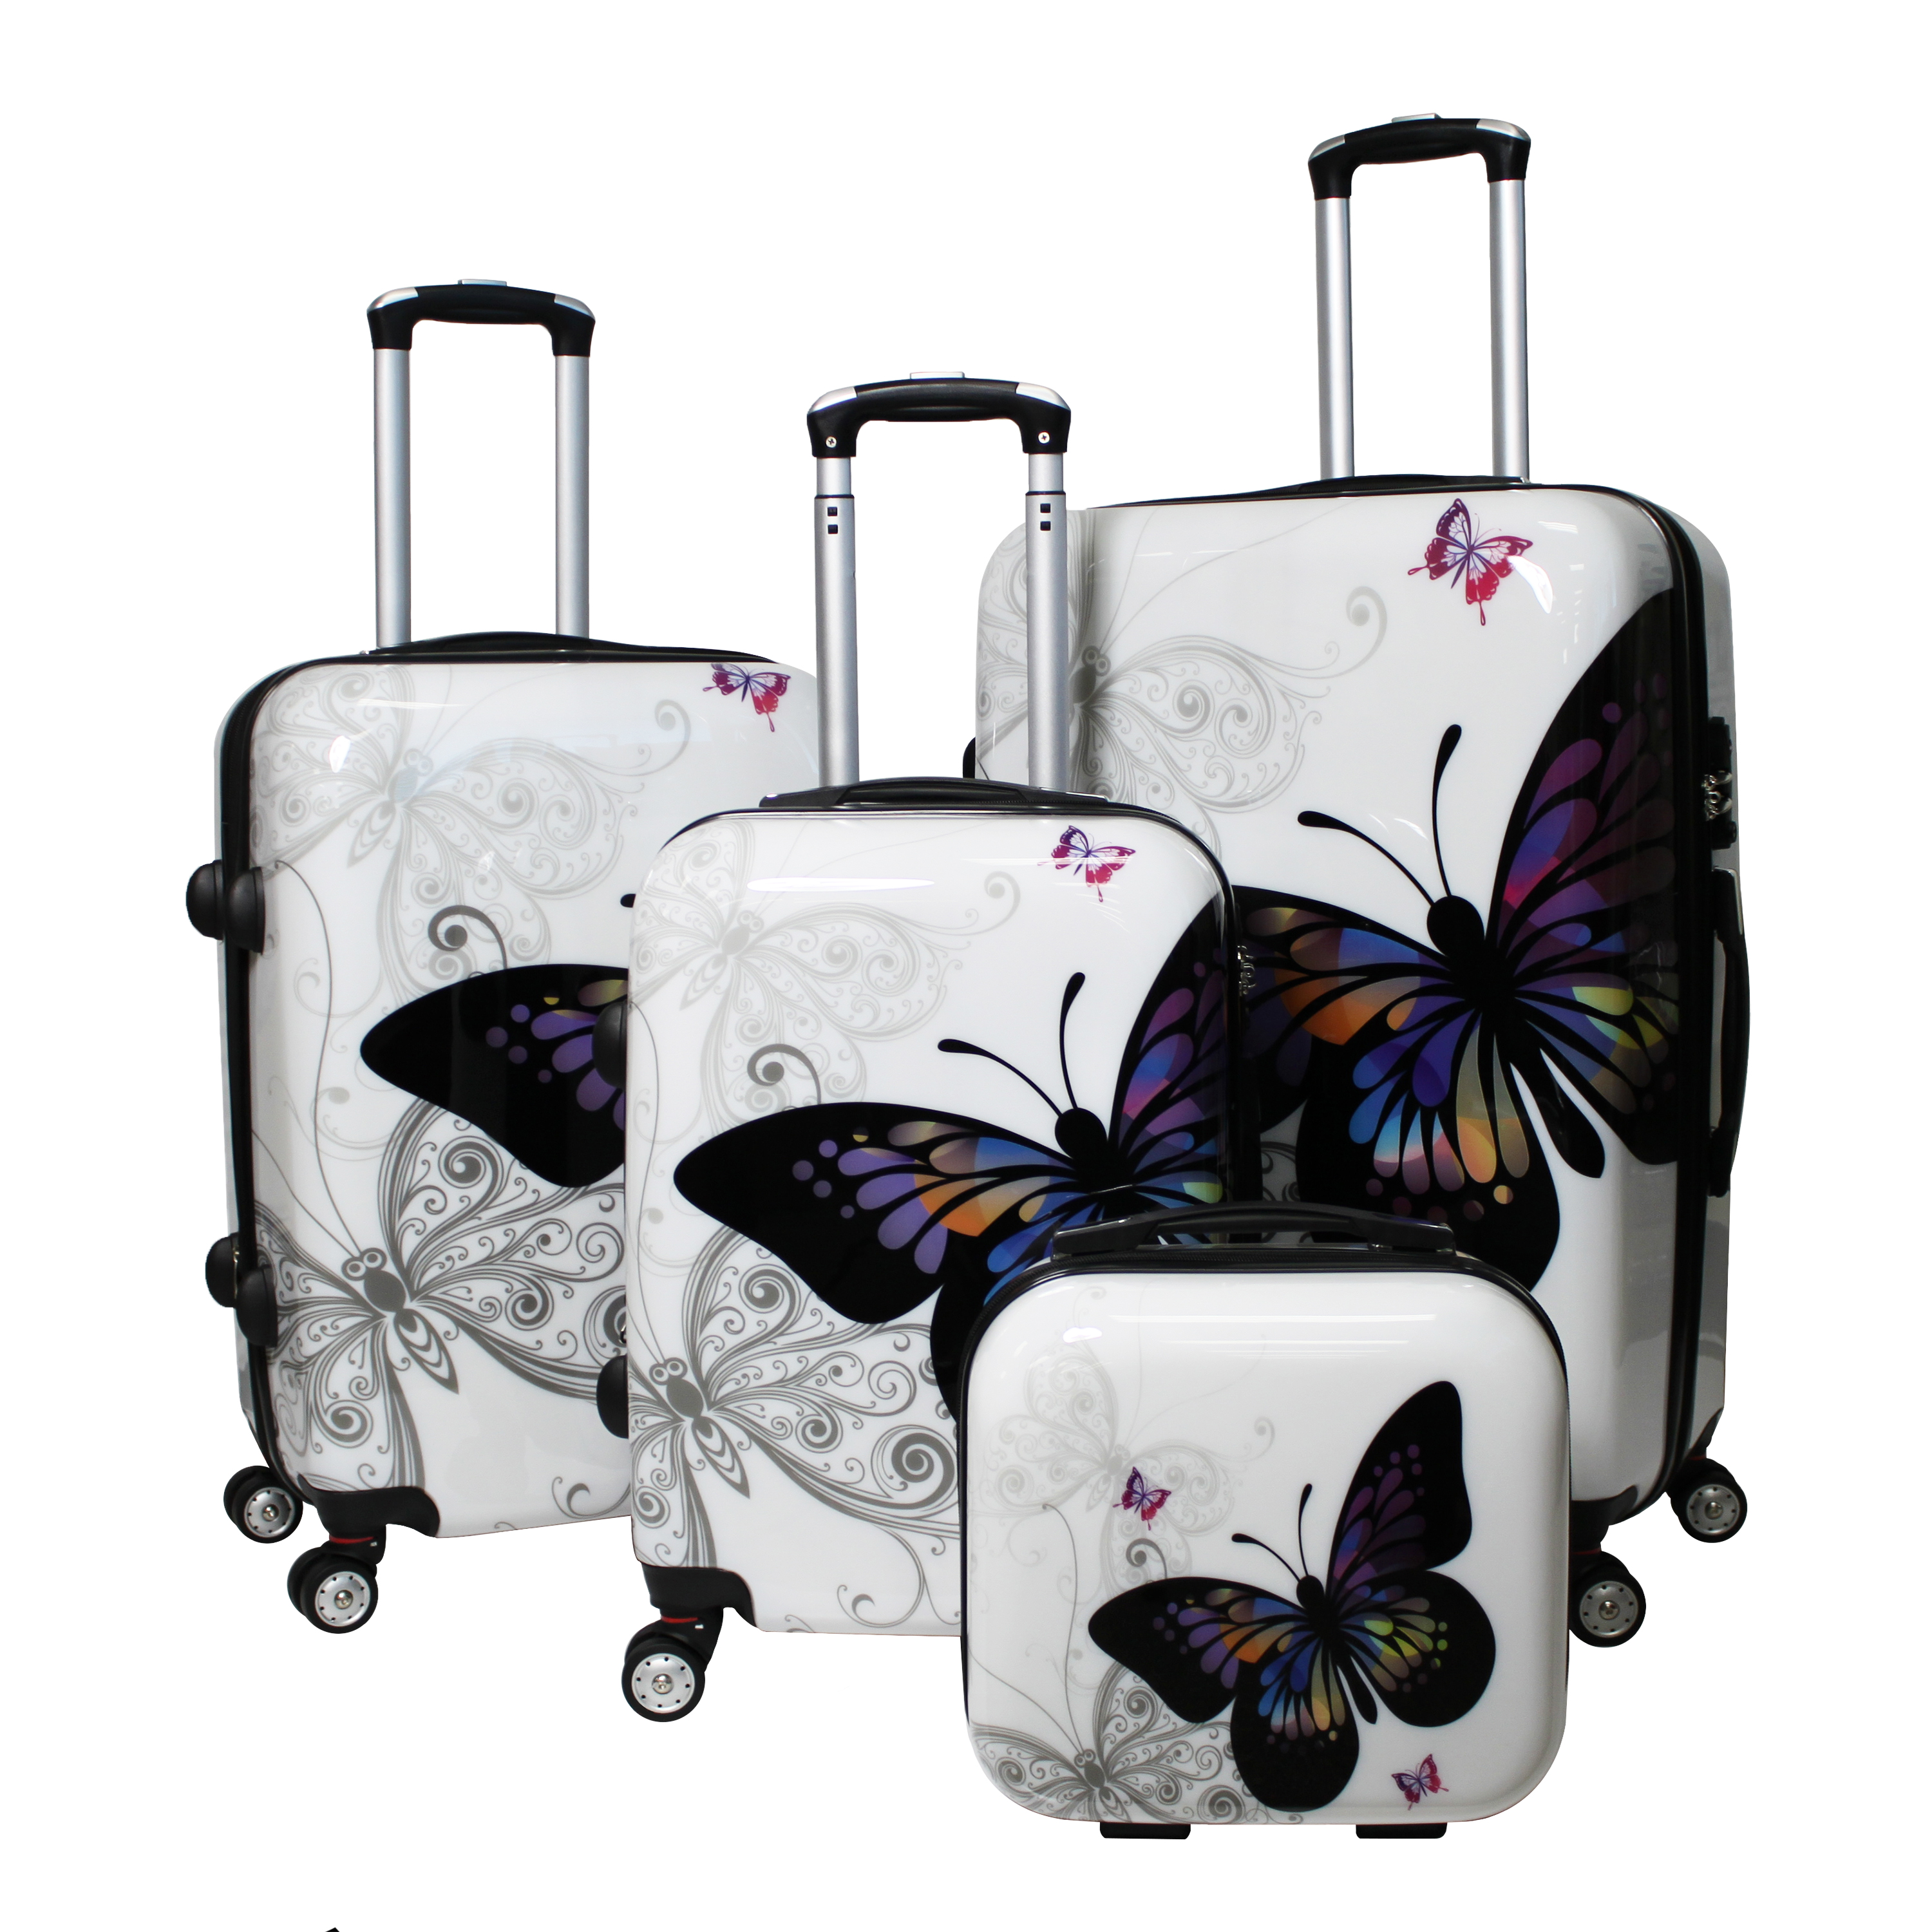 24dm110 Butterfly 4-piece Hardside Tsa Combination Lock Spinner Luggage Set